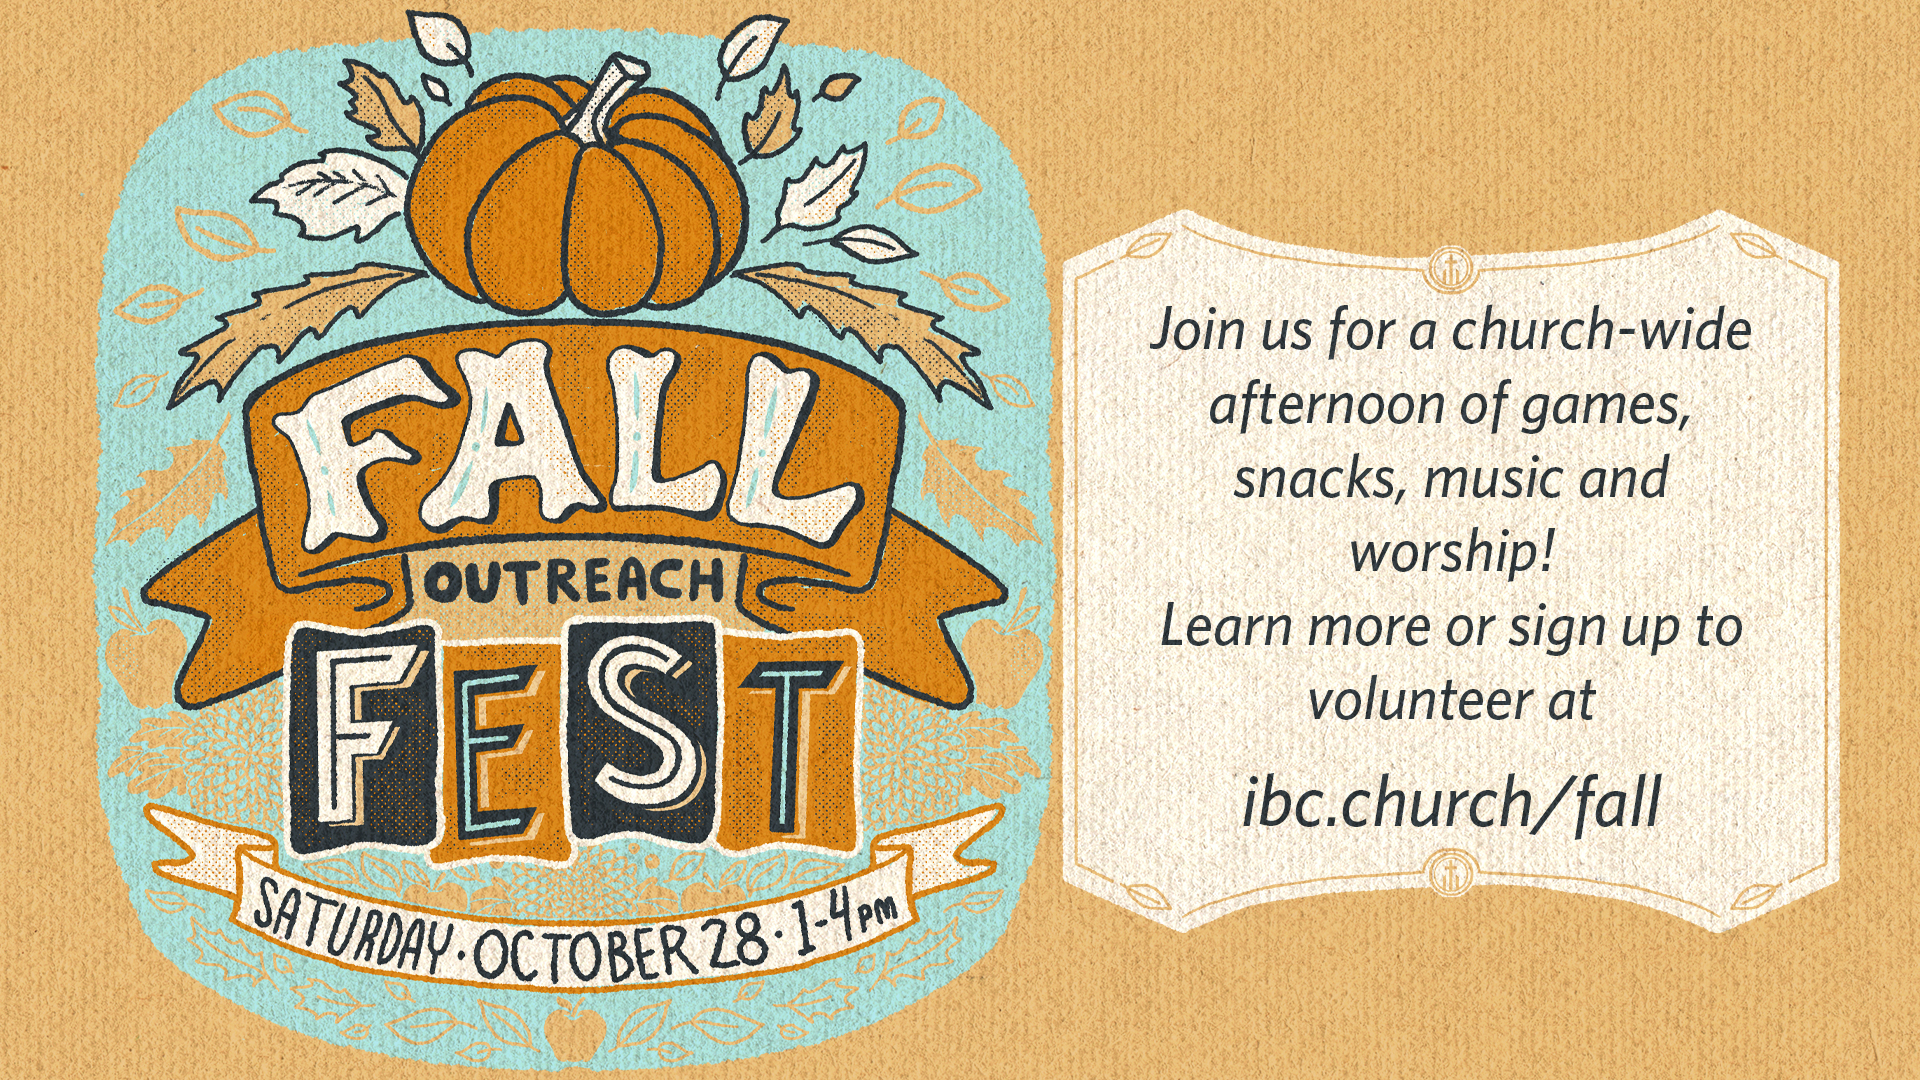 Fall Outreach Fest